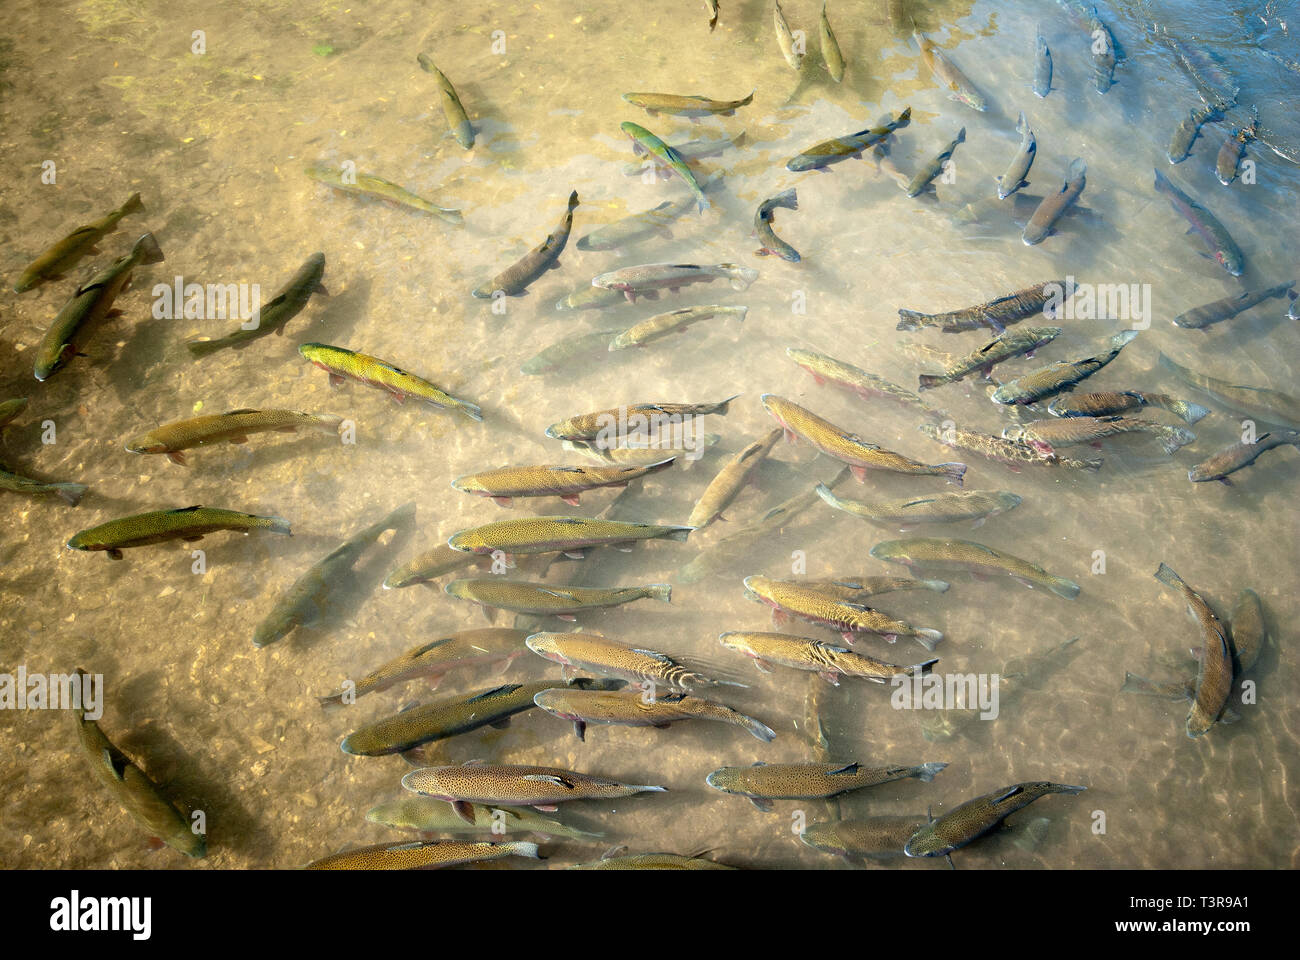 Truchas arcoiris (Oncorhynchus mykiss) en el estanque artificial, D.C. Booth histórica National Fish Hatchery, Spearfish, Dakota del Sur, EE.UU. Foto de stock